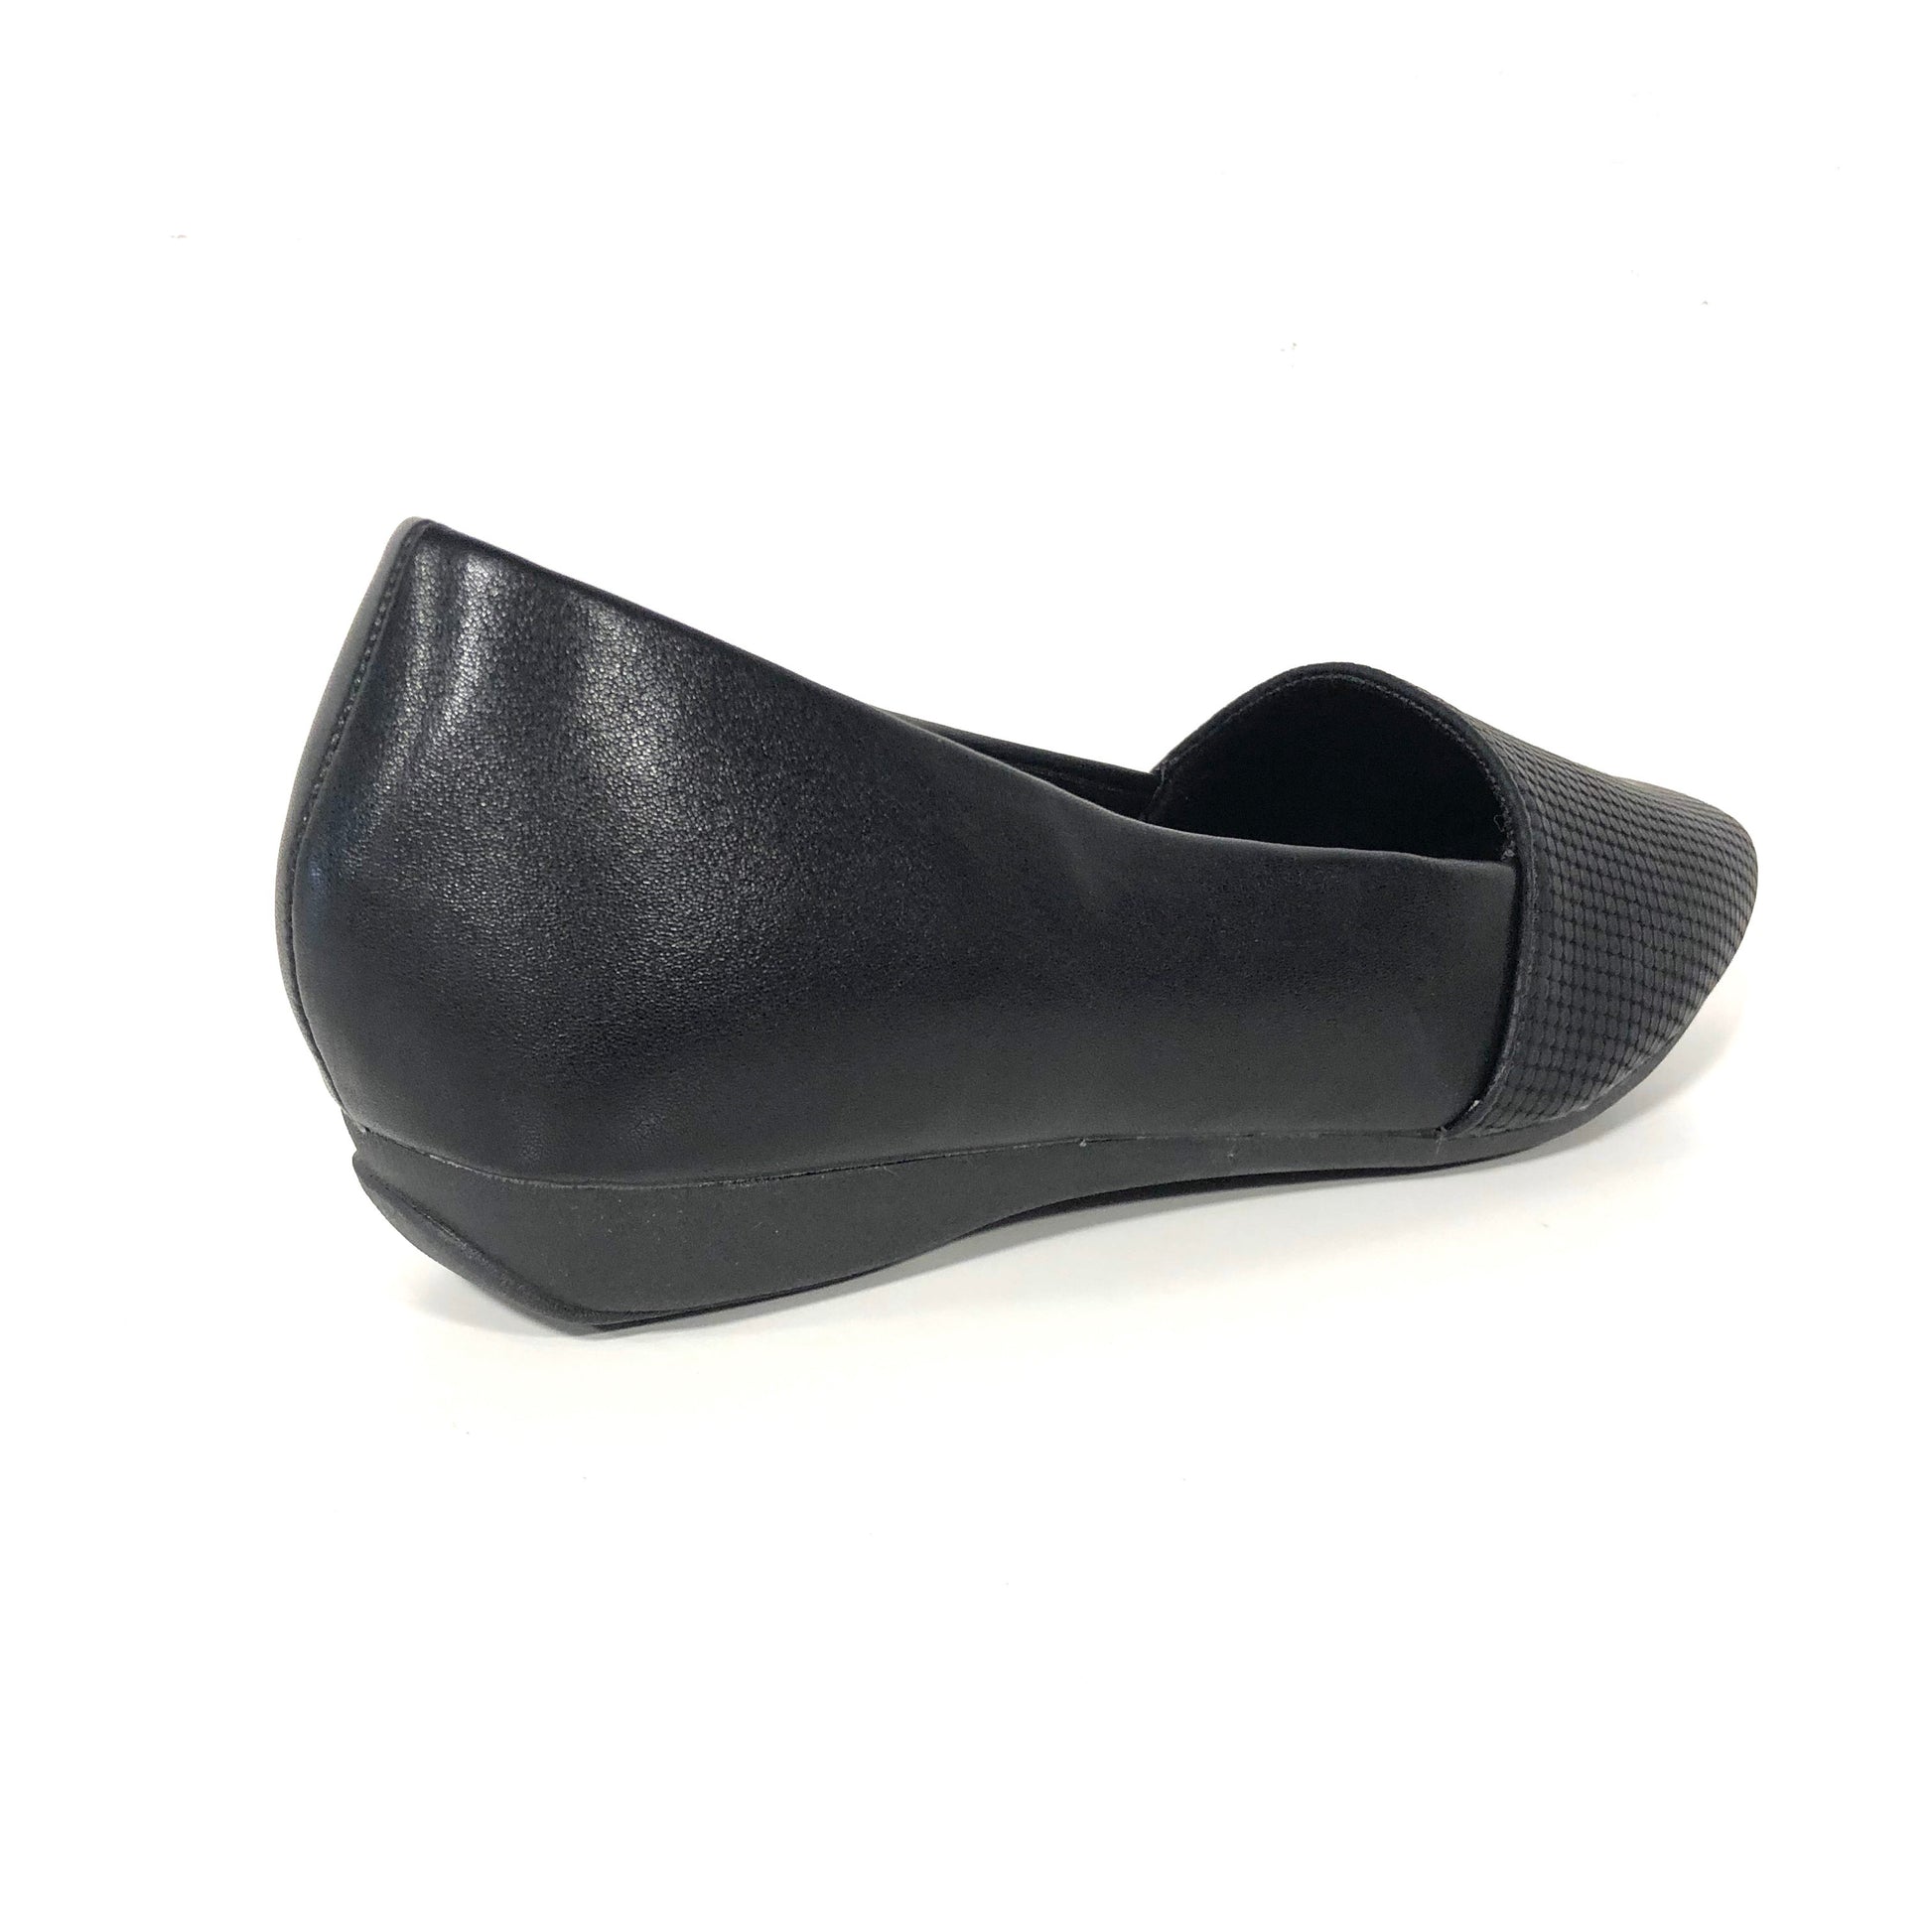 Laurel Black Flats Loafers - The Shoe Trunk